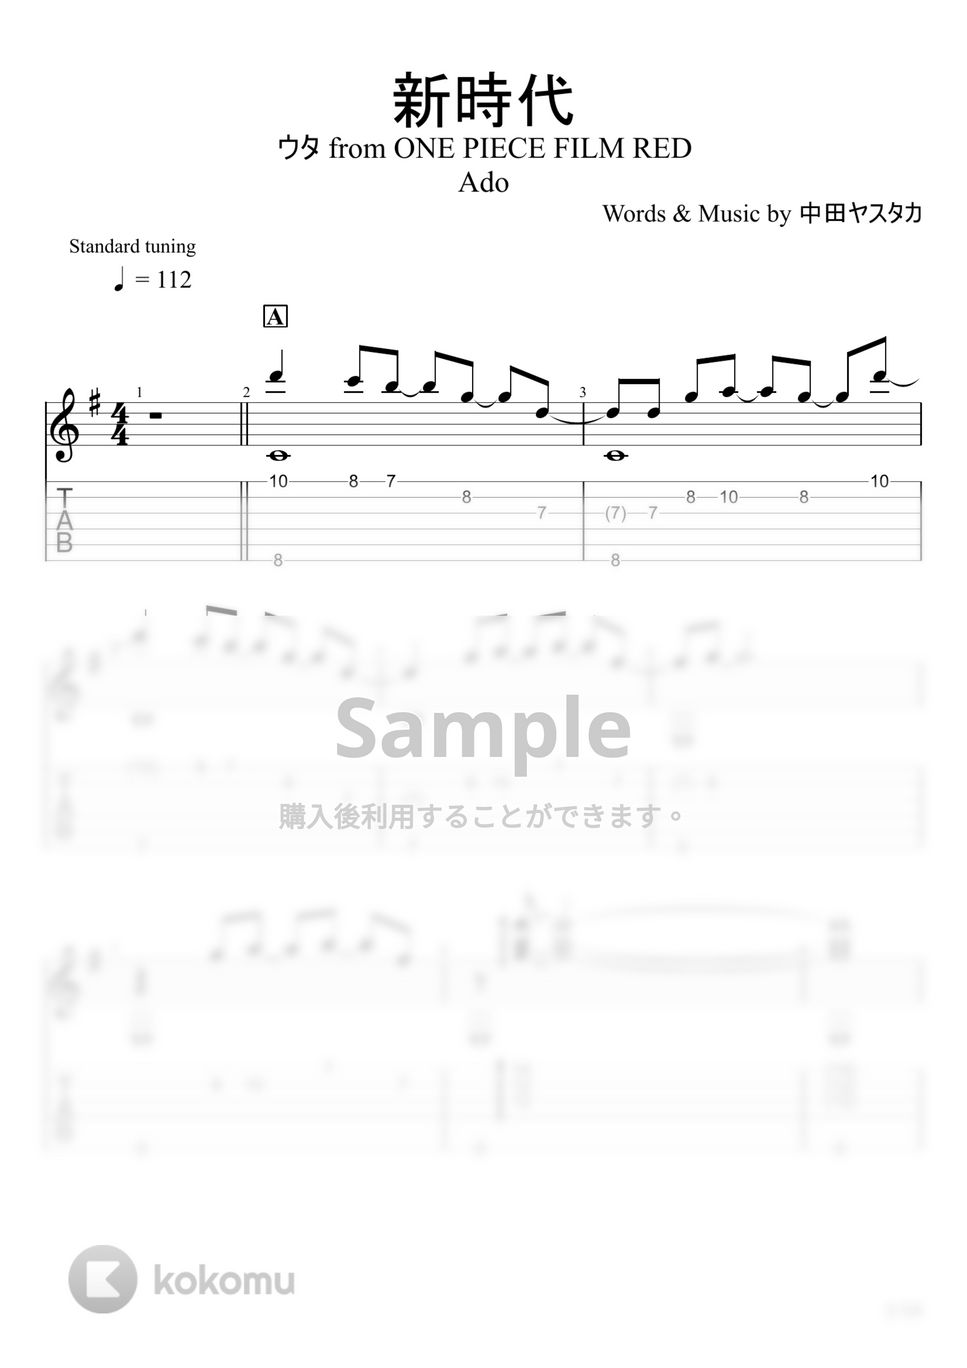 ONE PIECE FILM RED - 新時代 (ソロギター) by u3danchou